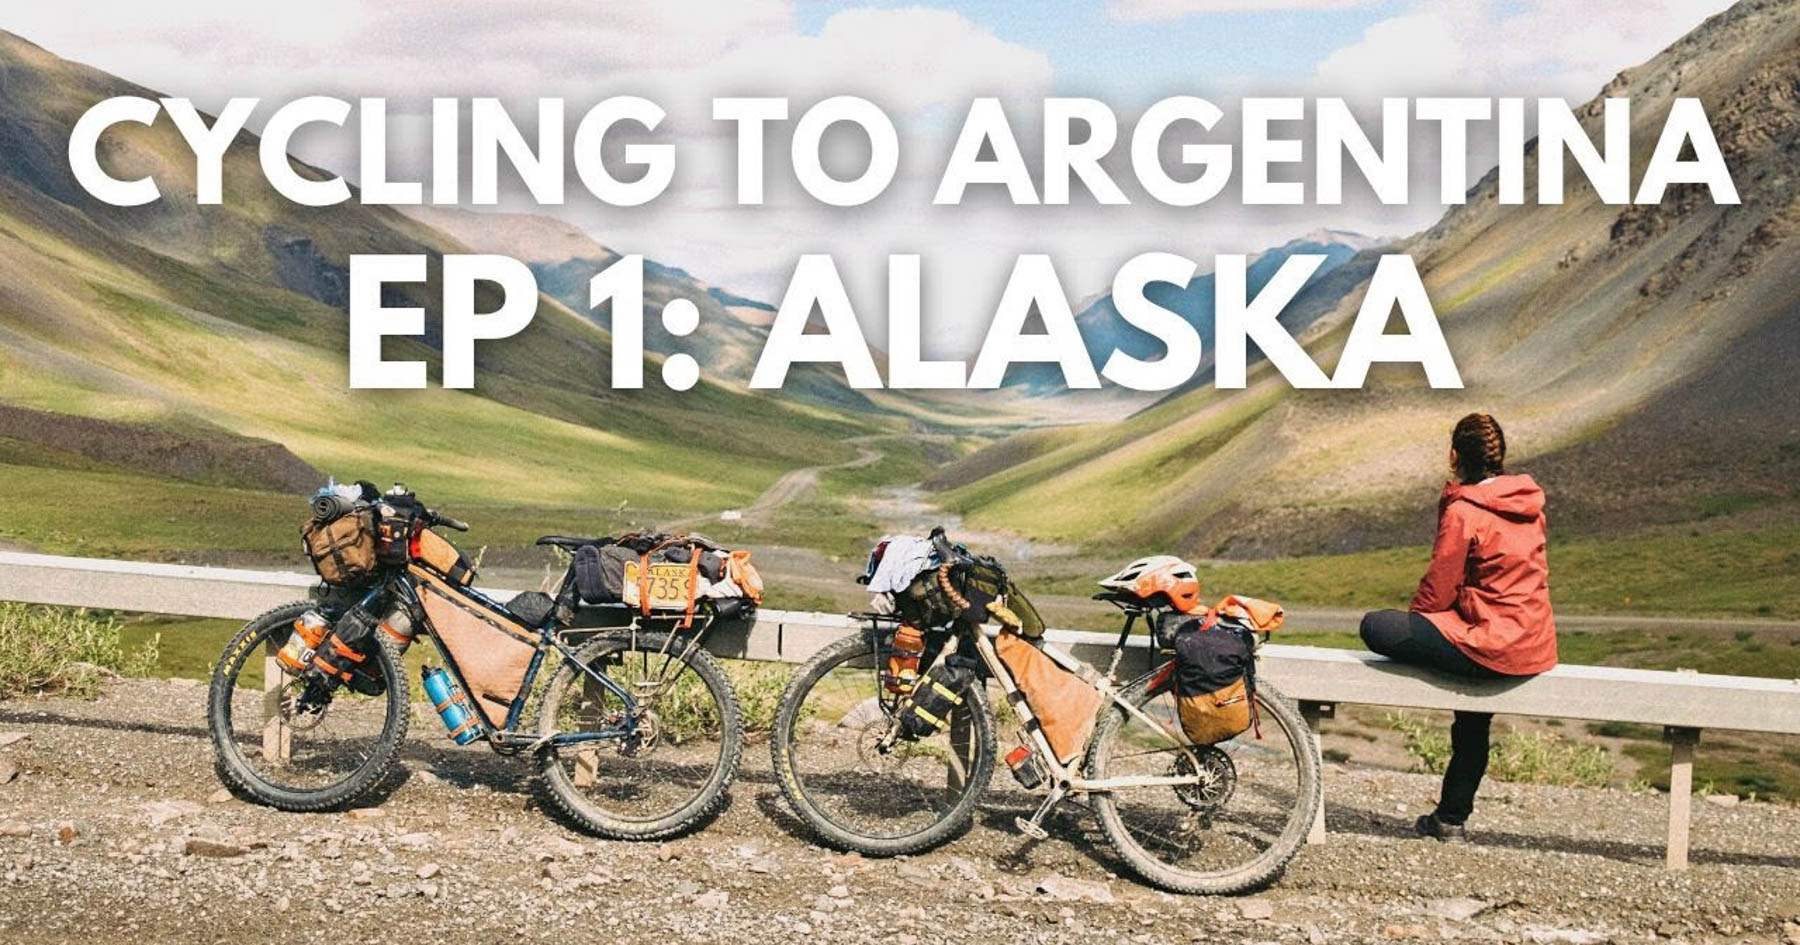 travel adventure alaska to argentina